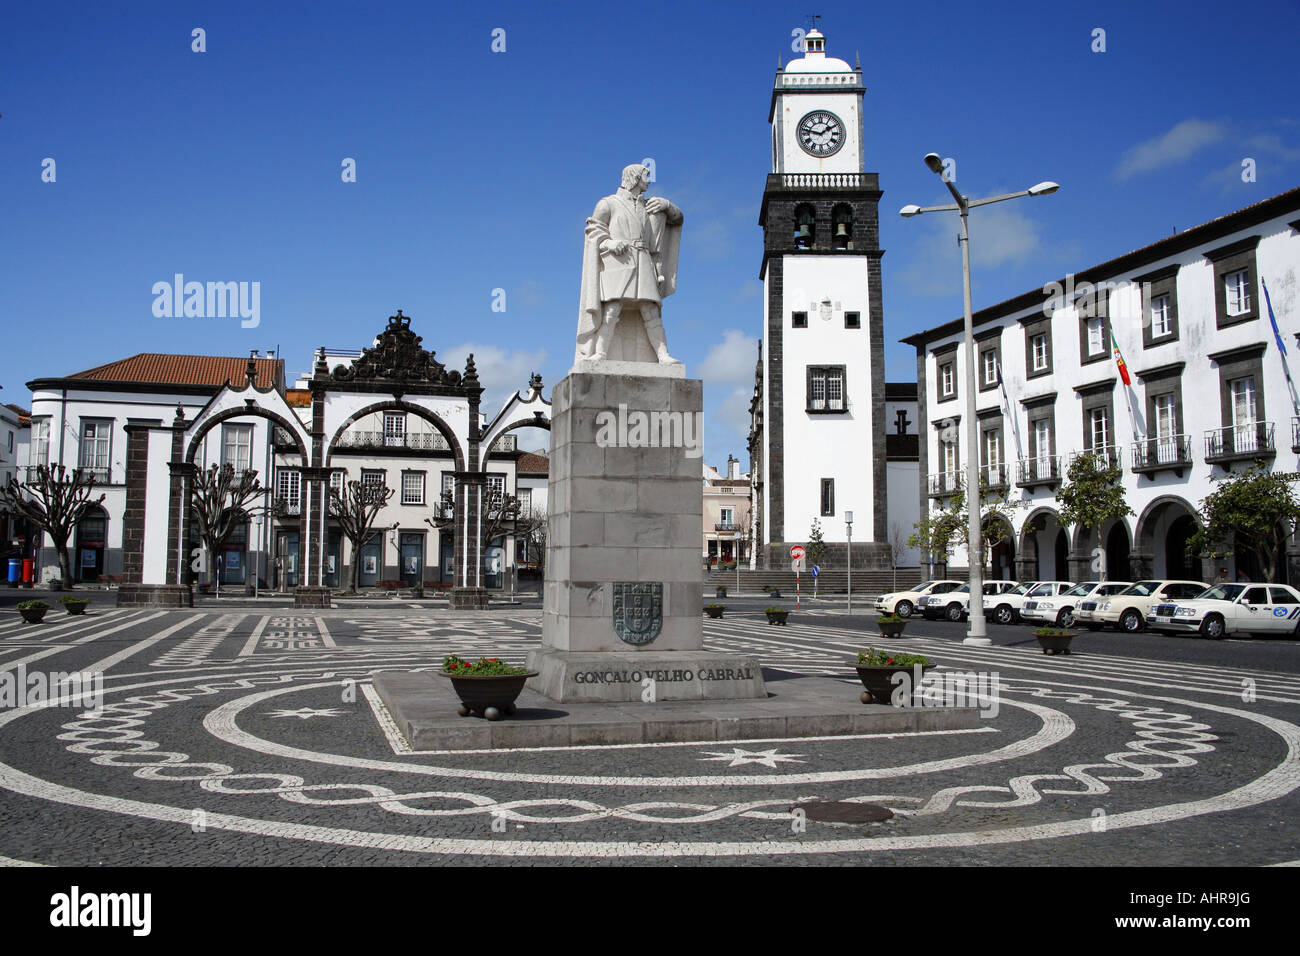 The main square in downtown Ponta Delgada Sao Miguel island Azores islands Portugal Stock Photo